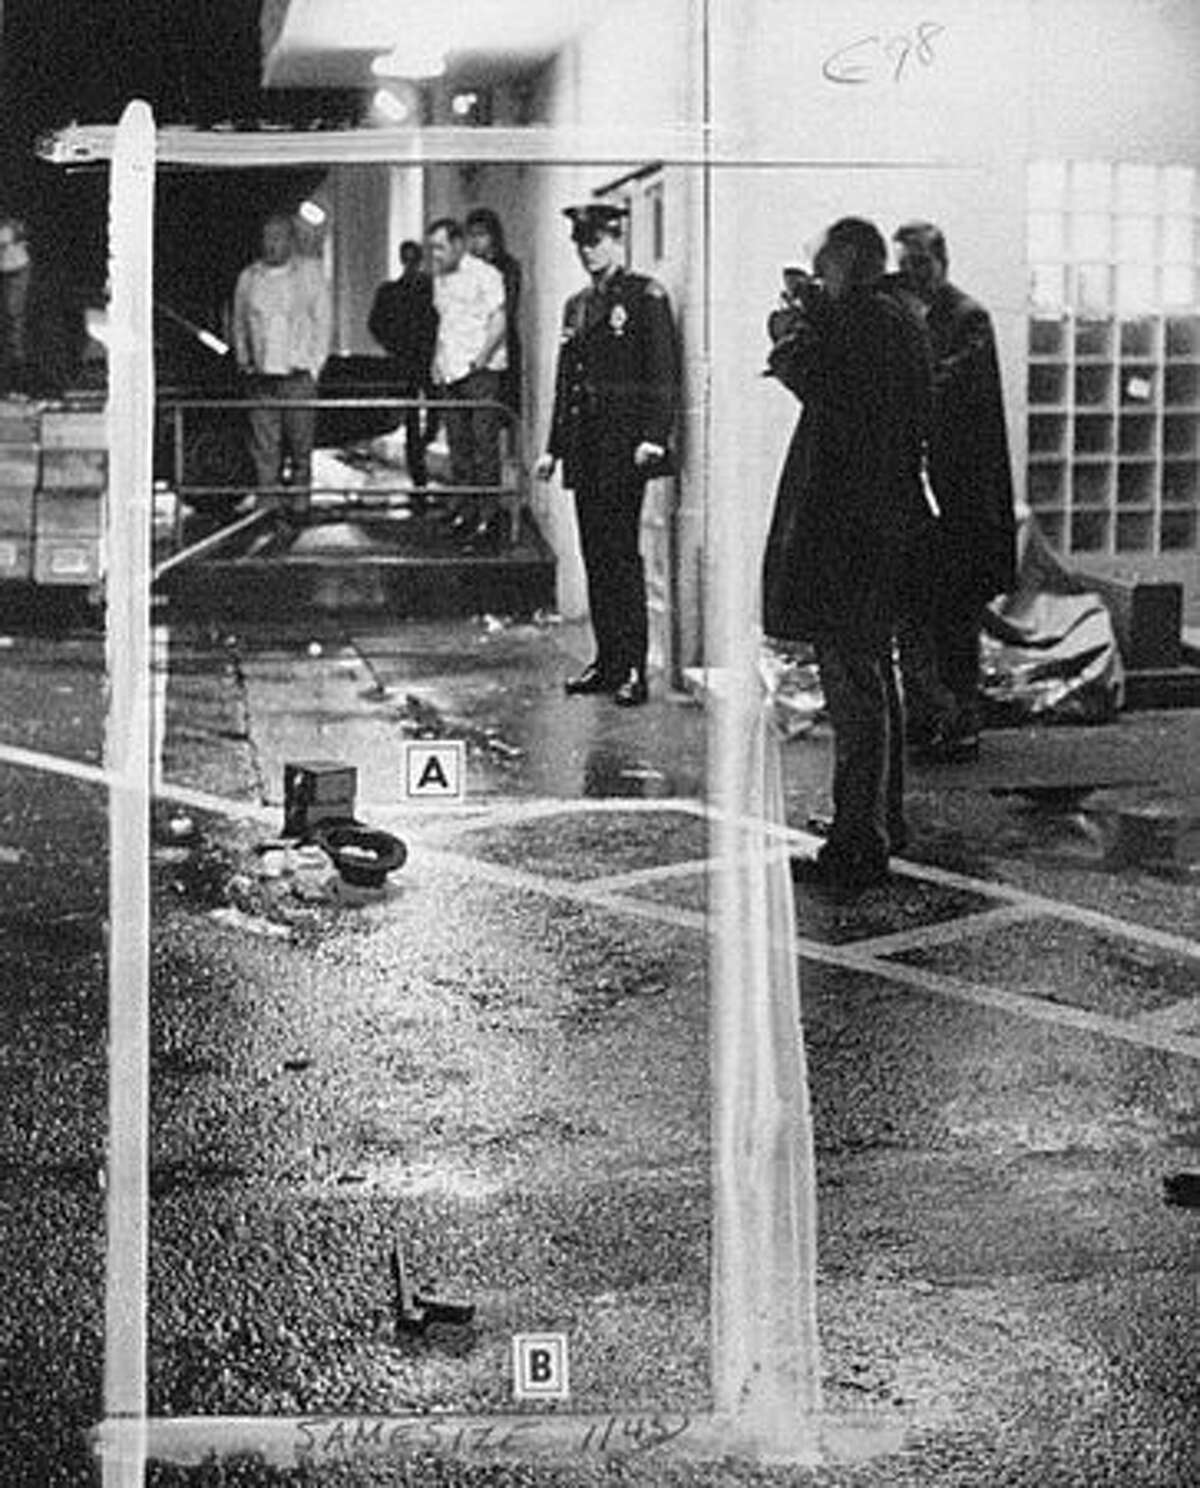 This is the scene where Seattle Police Officer Robert Allshaw was shot, Nov. 11, 1968 at the Pinehurst IGA grocery store.